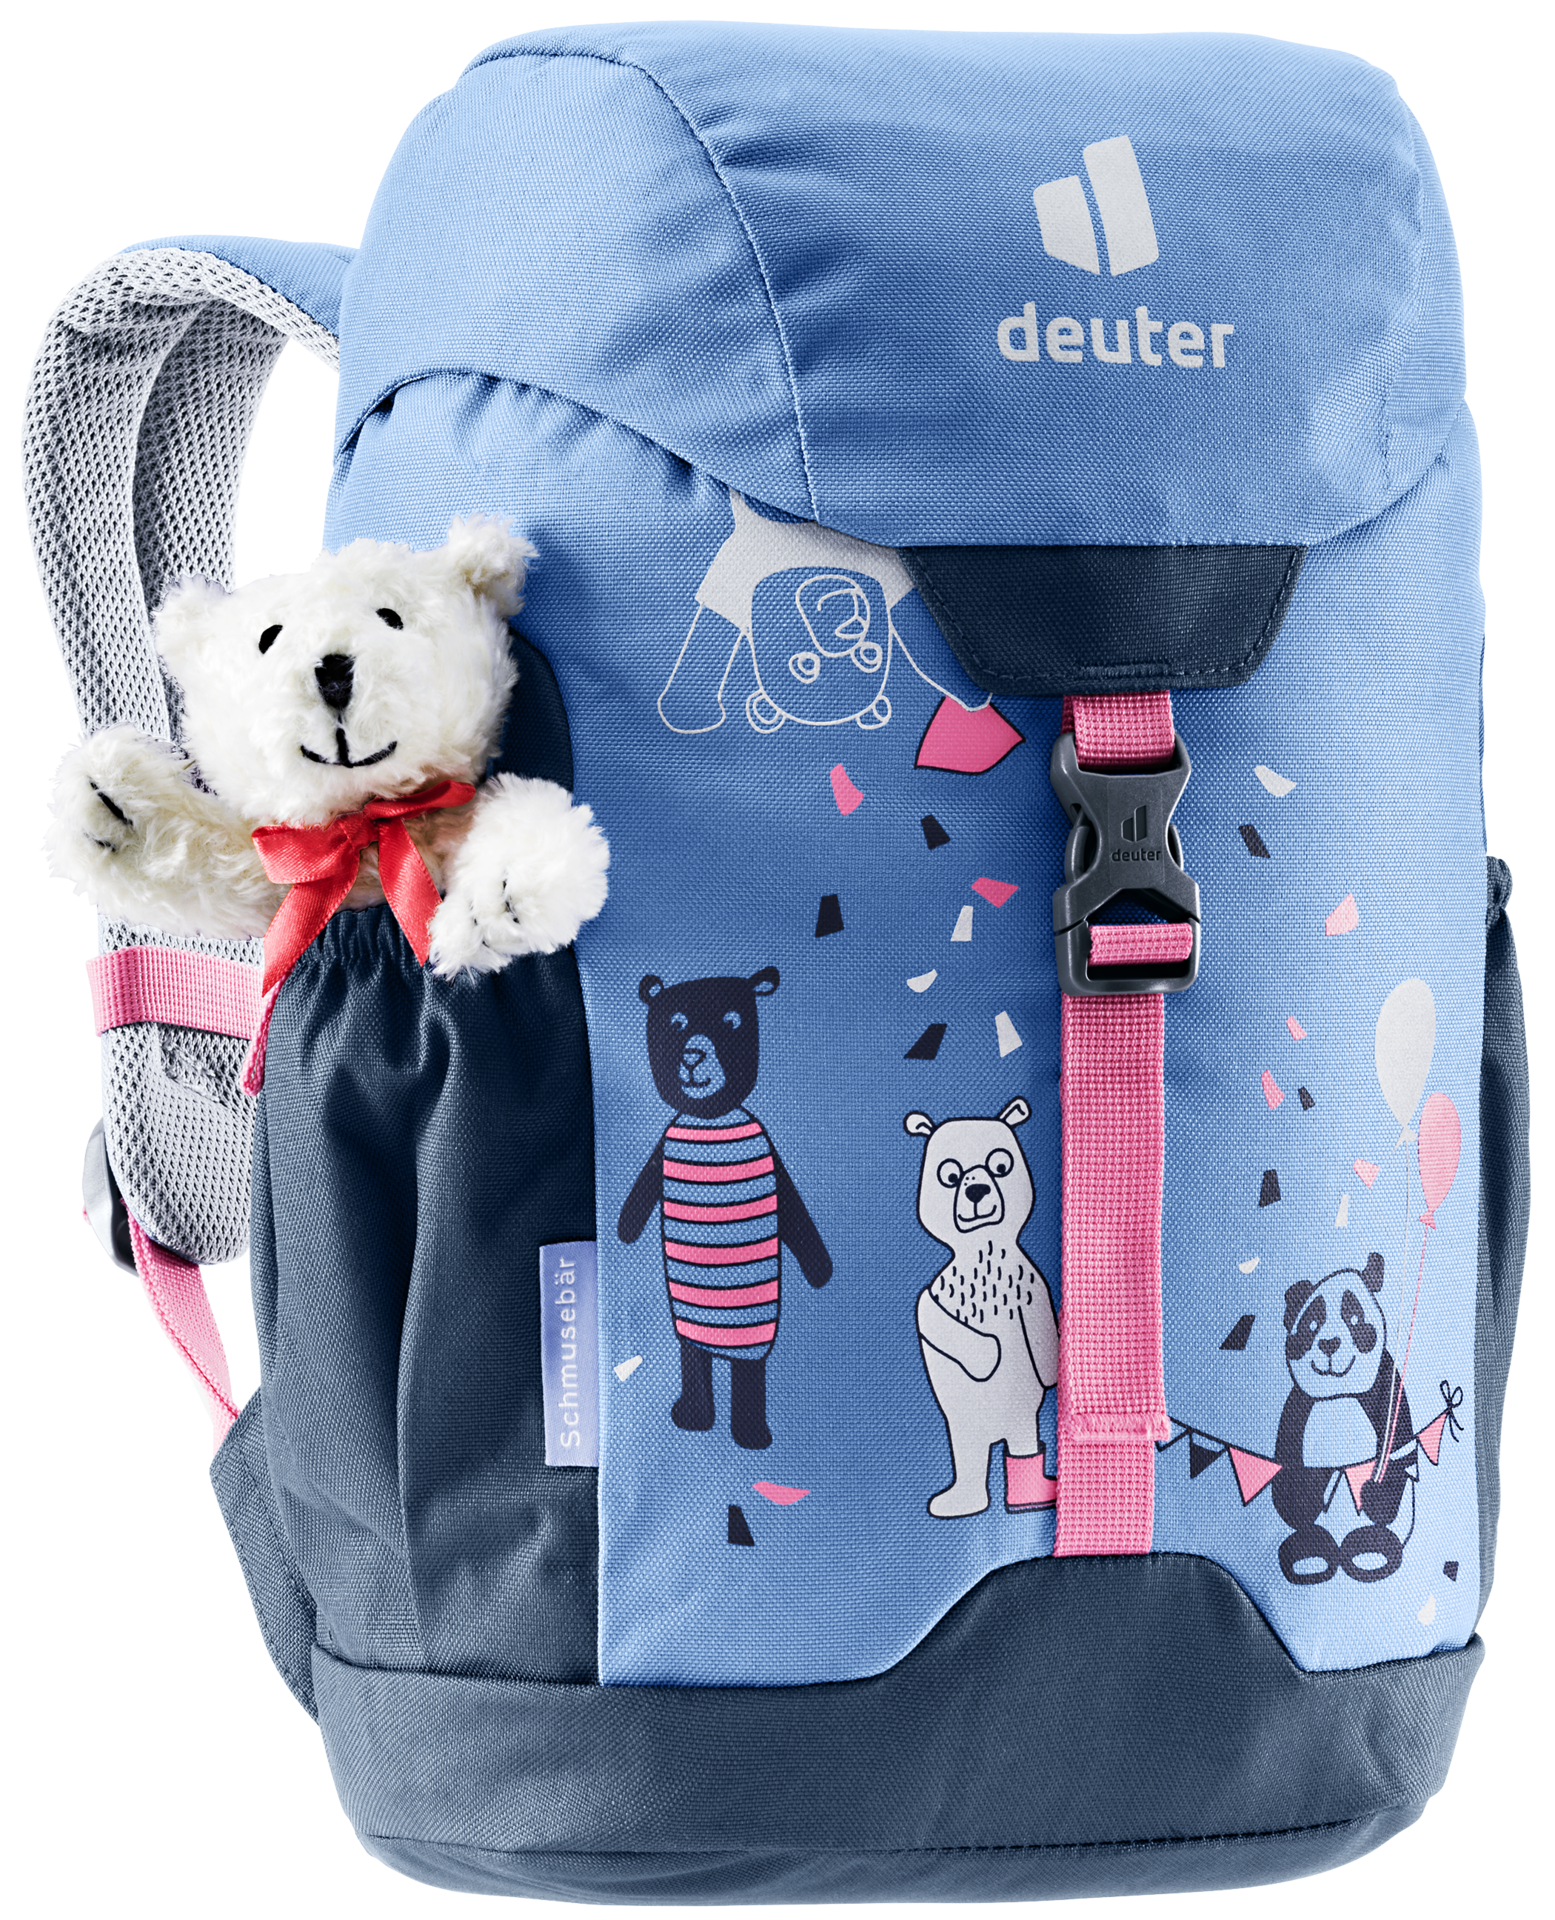 deuter Schmusebär | Children's backpack